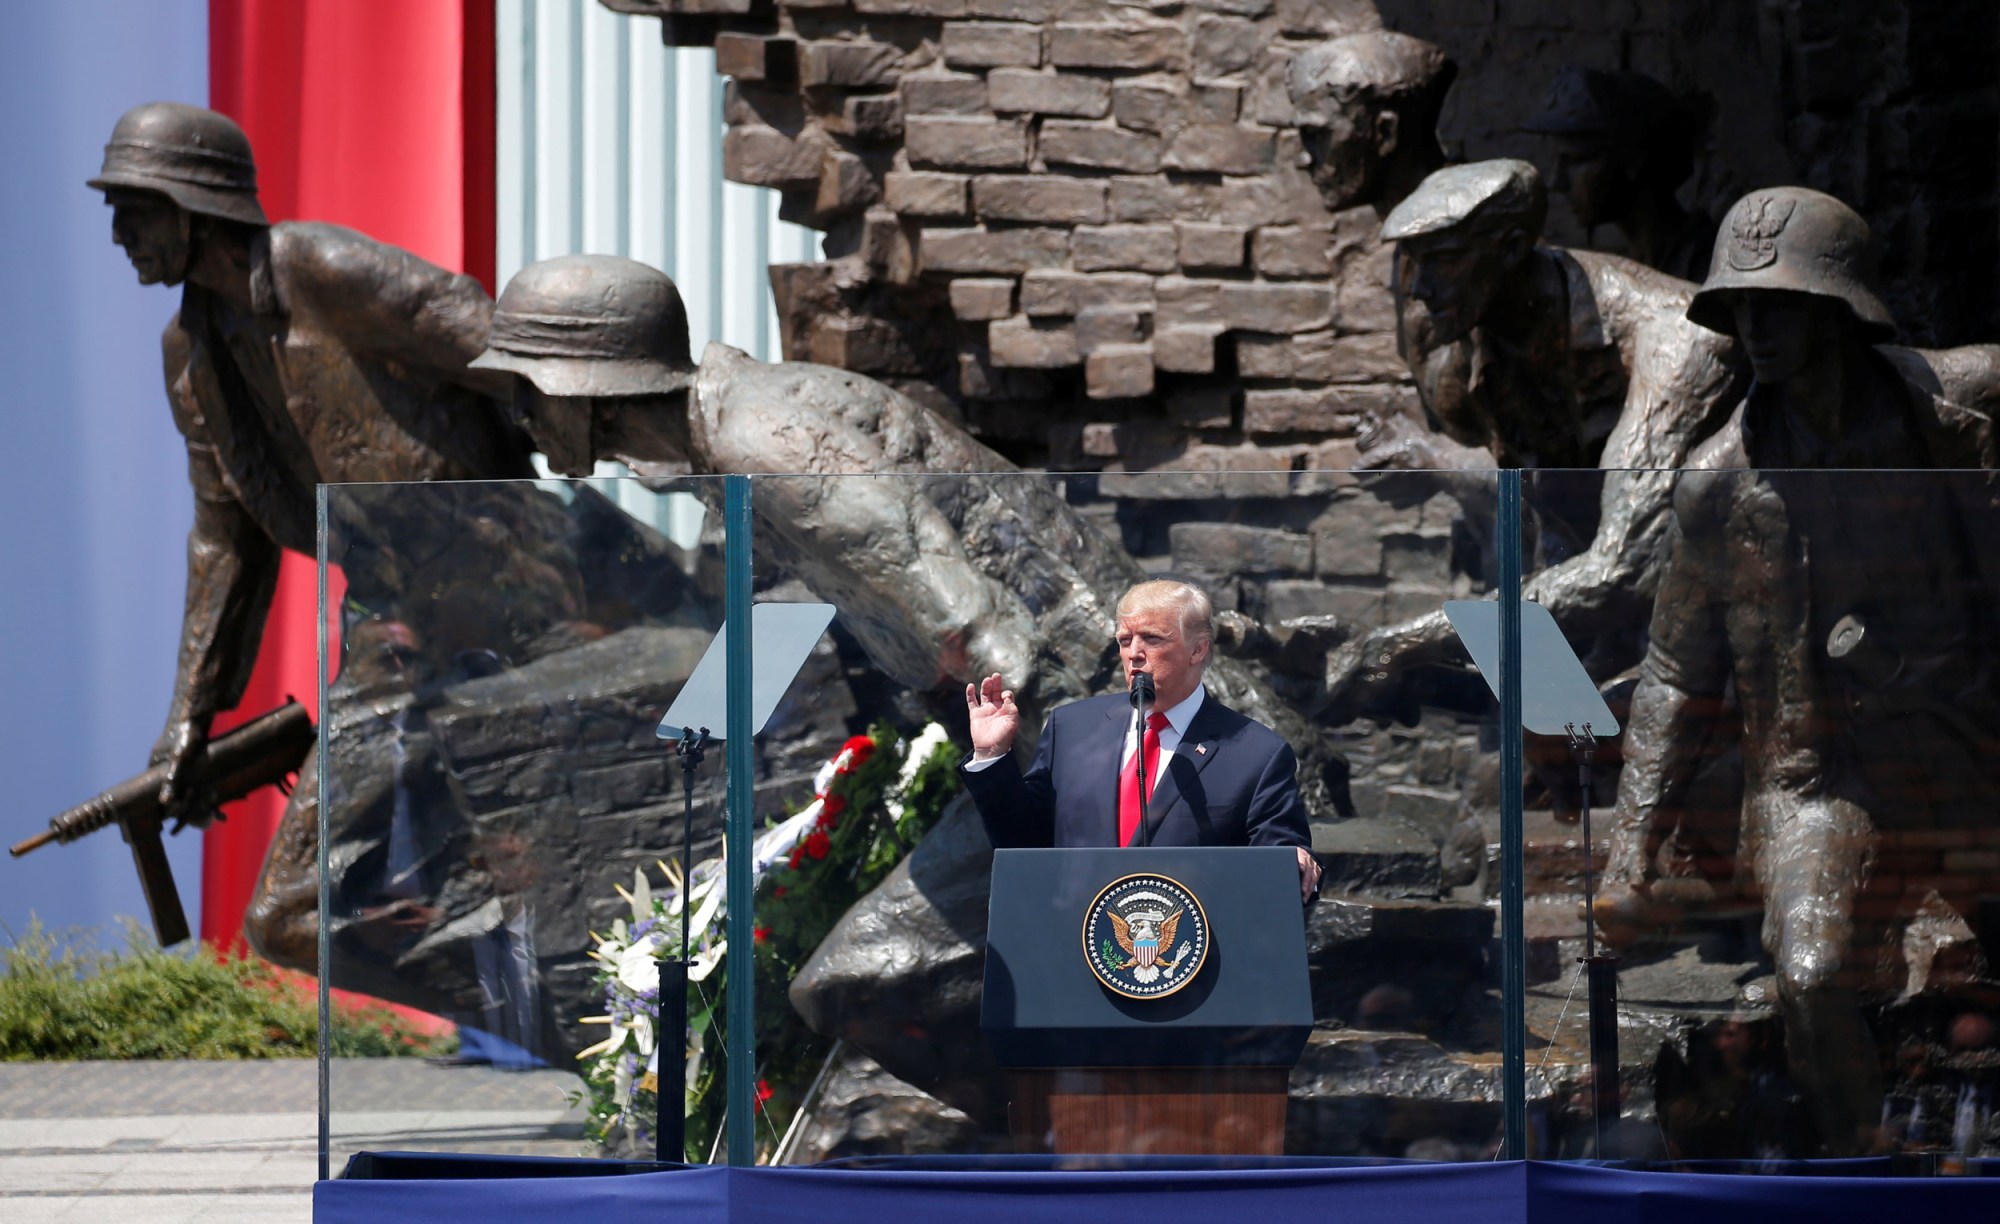 Image: Trump gives a public speech at Krasinski Square in Warsaw